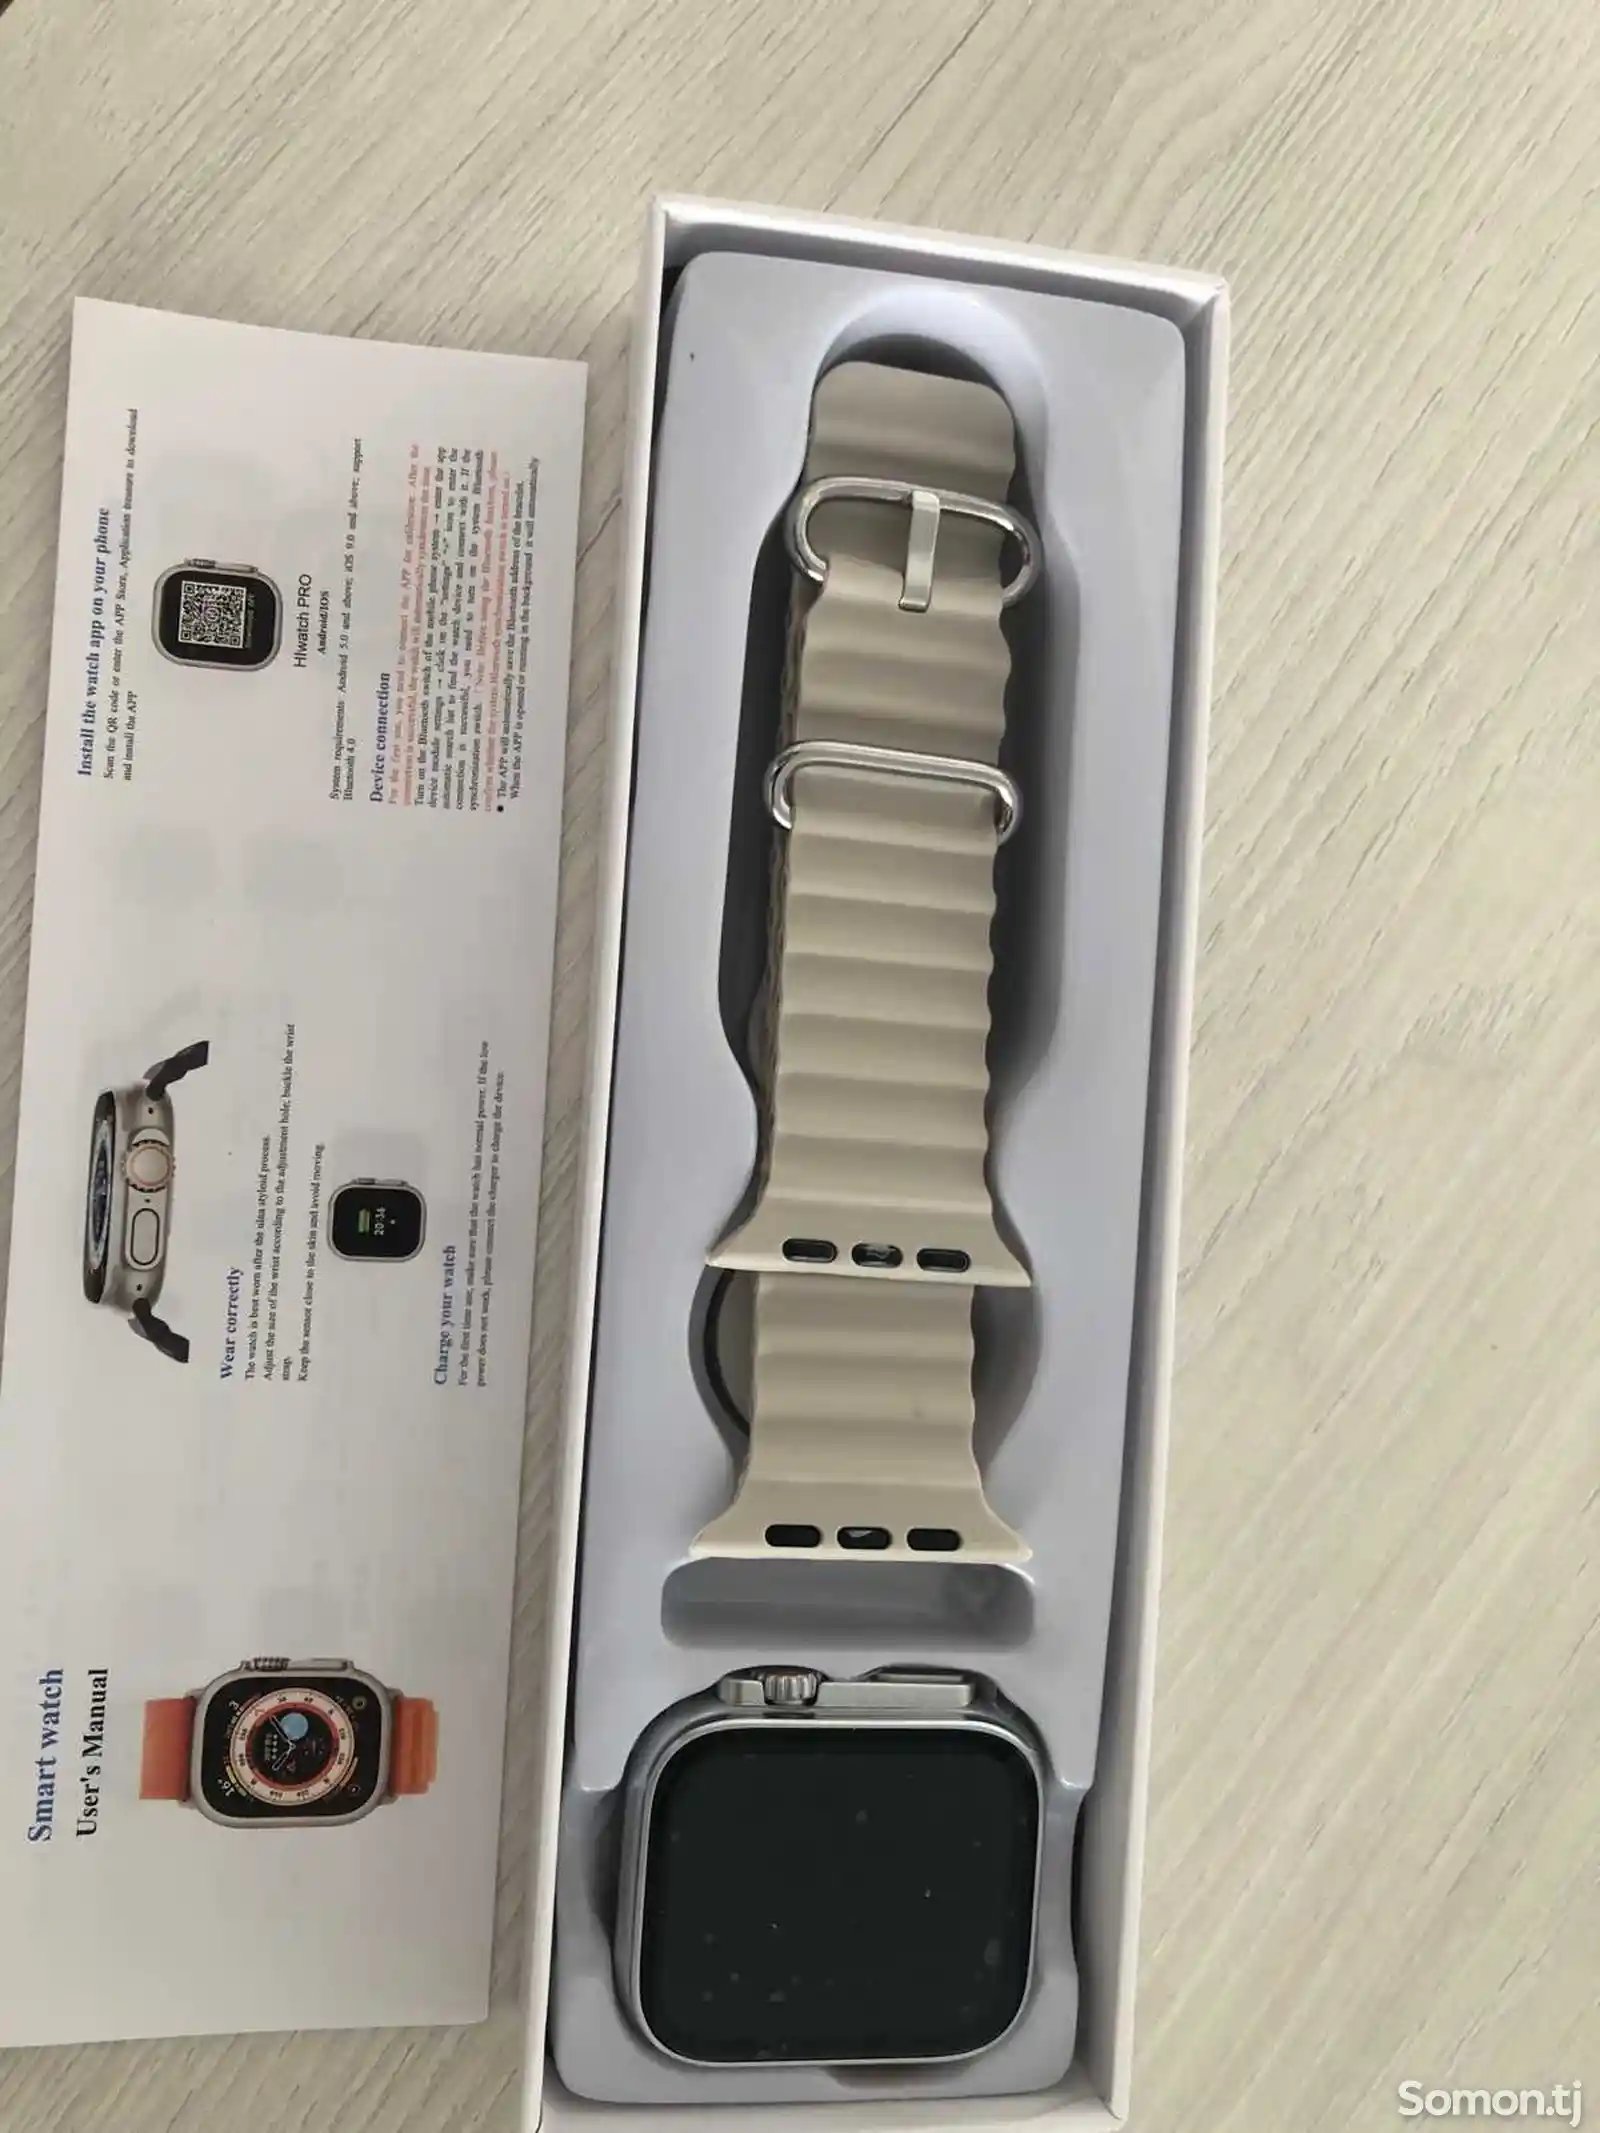 Смарт часы Smart Watch T800 Ultra-3